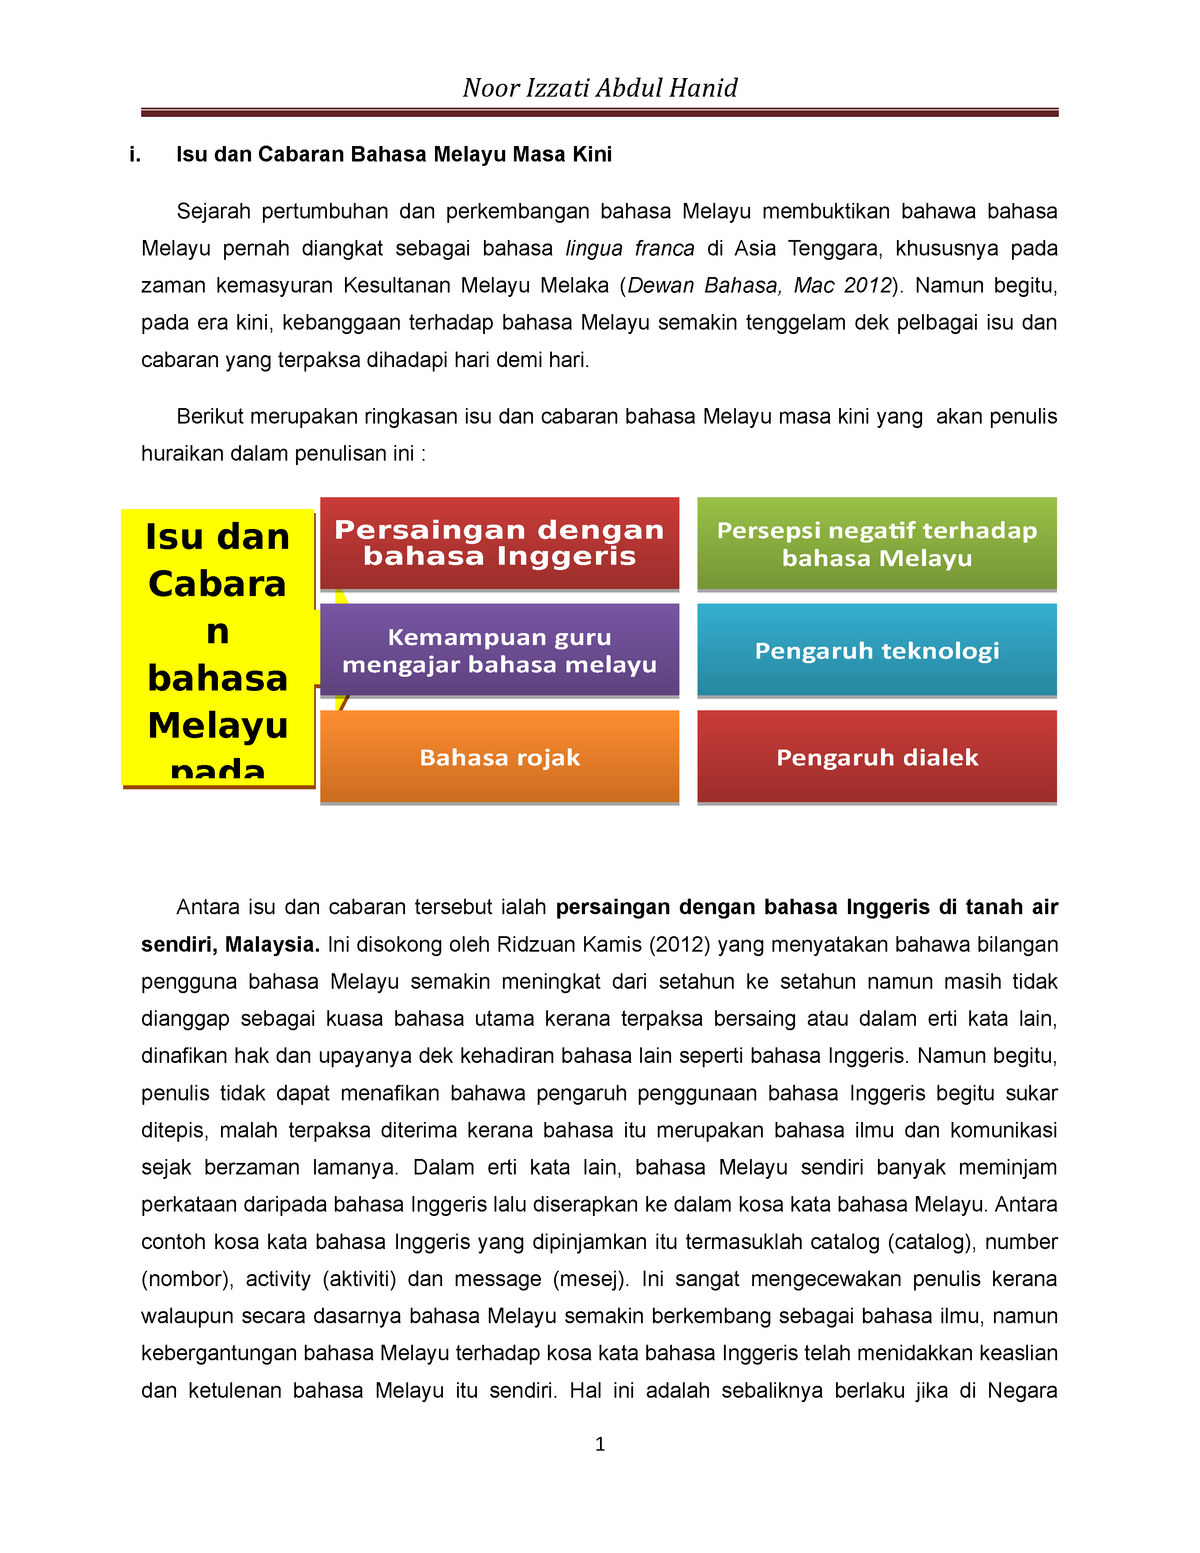 Melayu bahasa Malaysian language